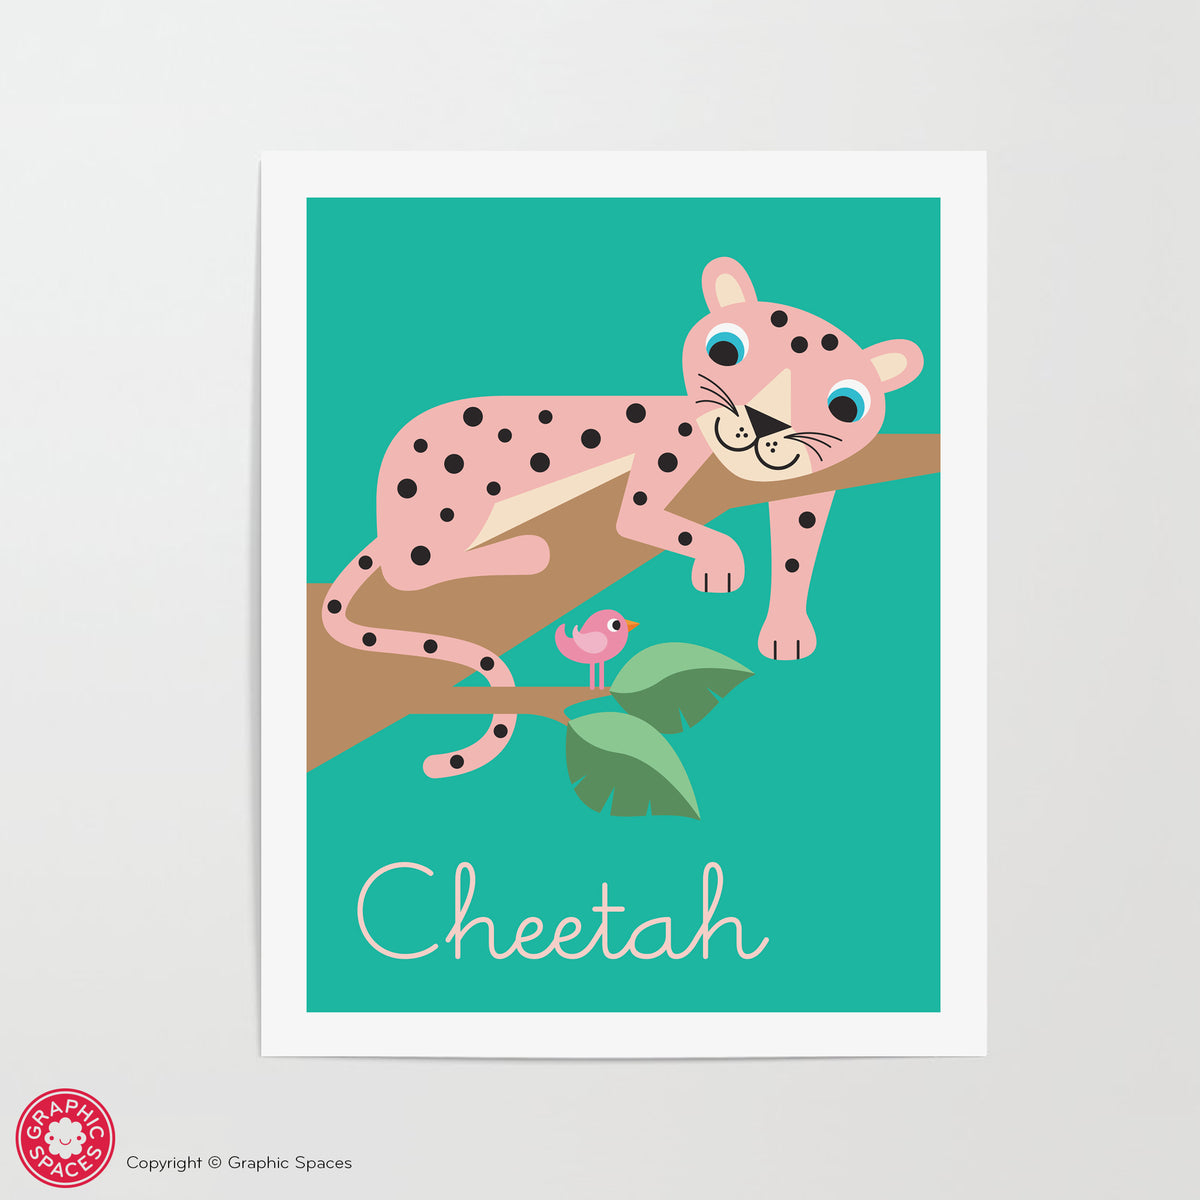 Cheetah nursery art print.